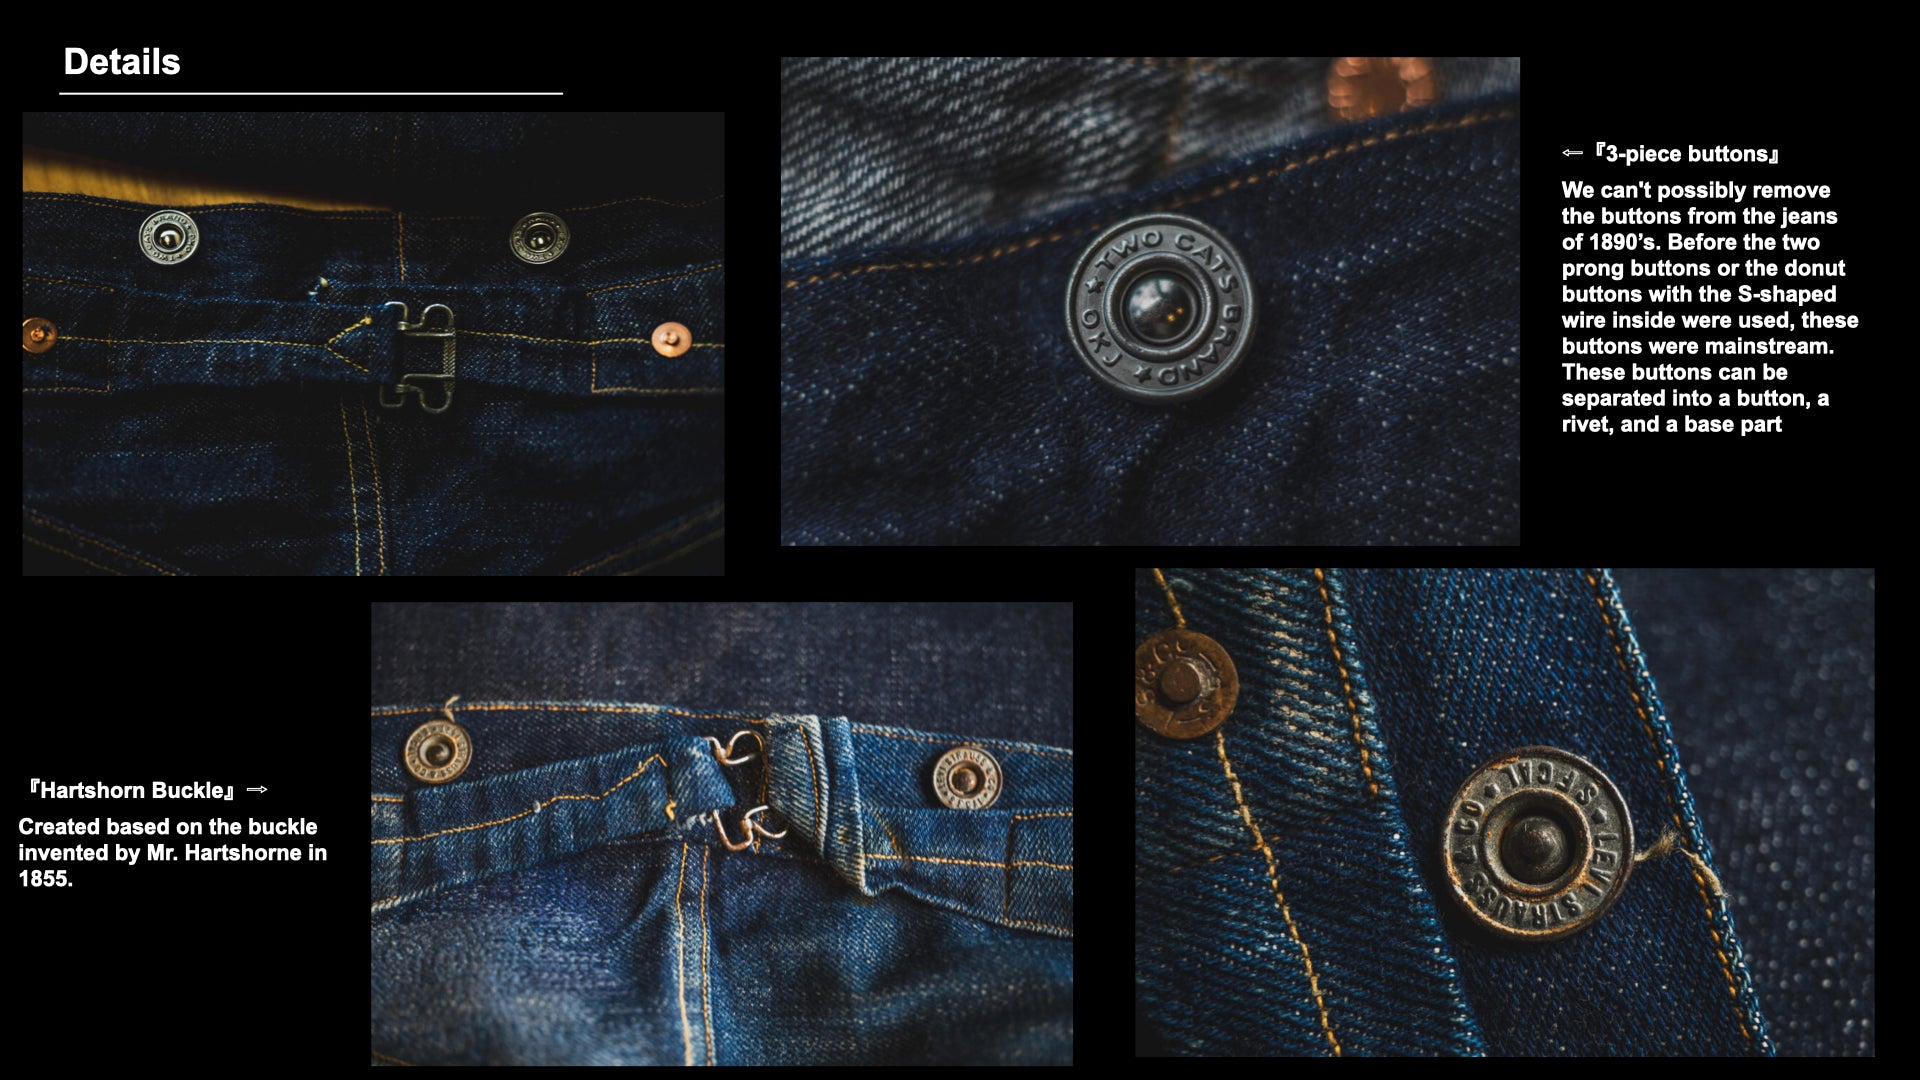 □Pre-Order□ No.2 Jeans 1890